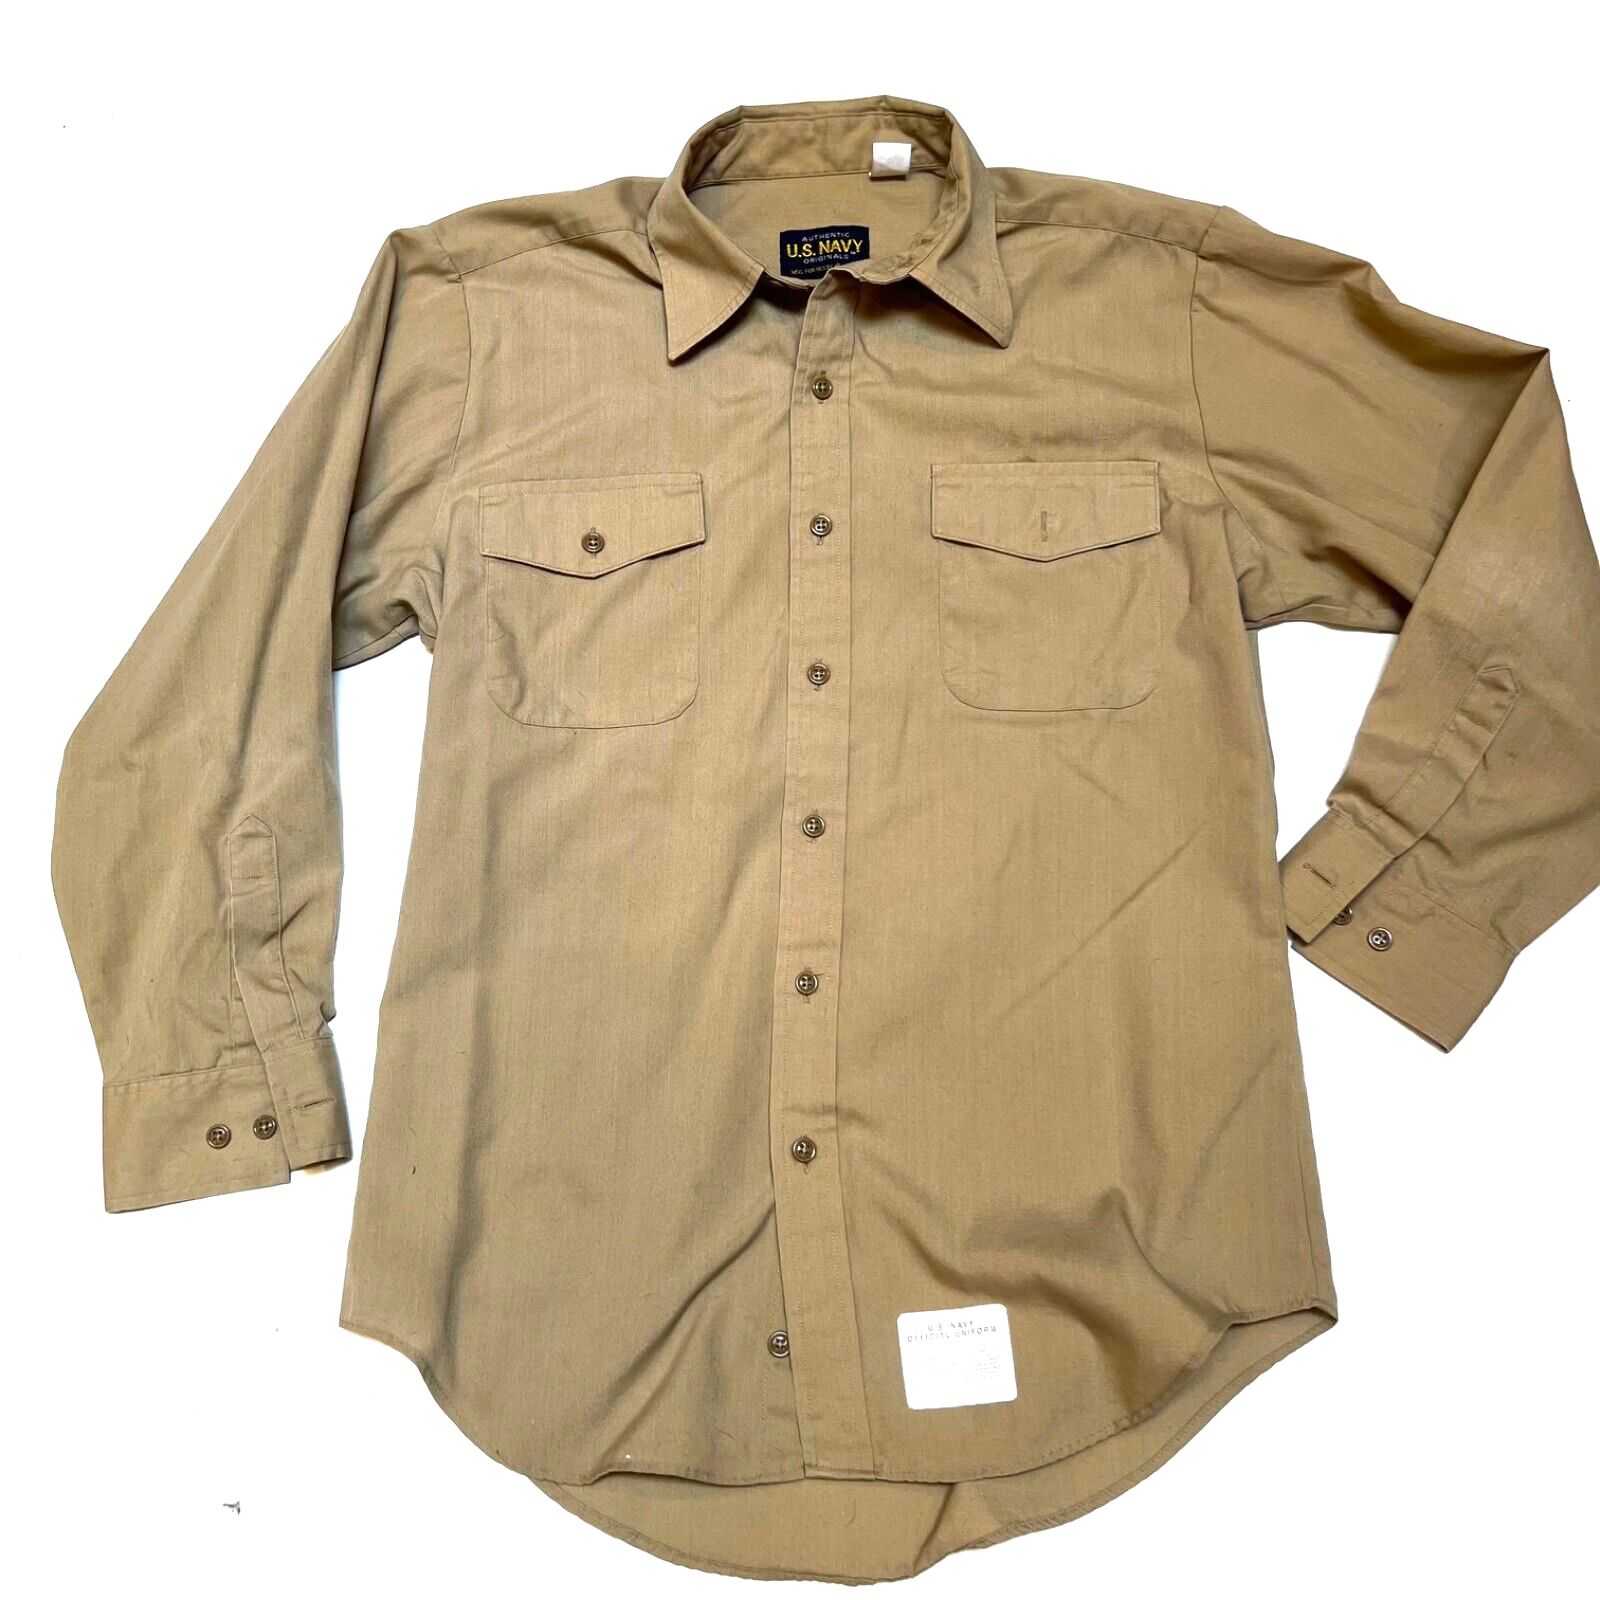 Authentic U.S. NAVY Official Uniform Size 16.5 - 32/33 Long Sleeve Button Shirt